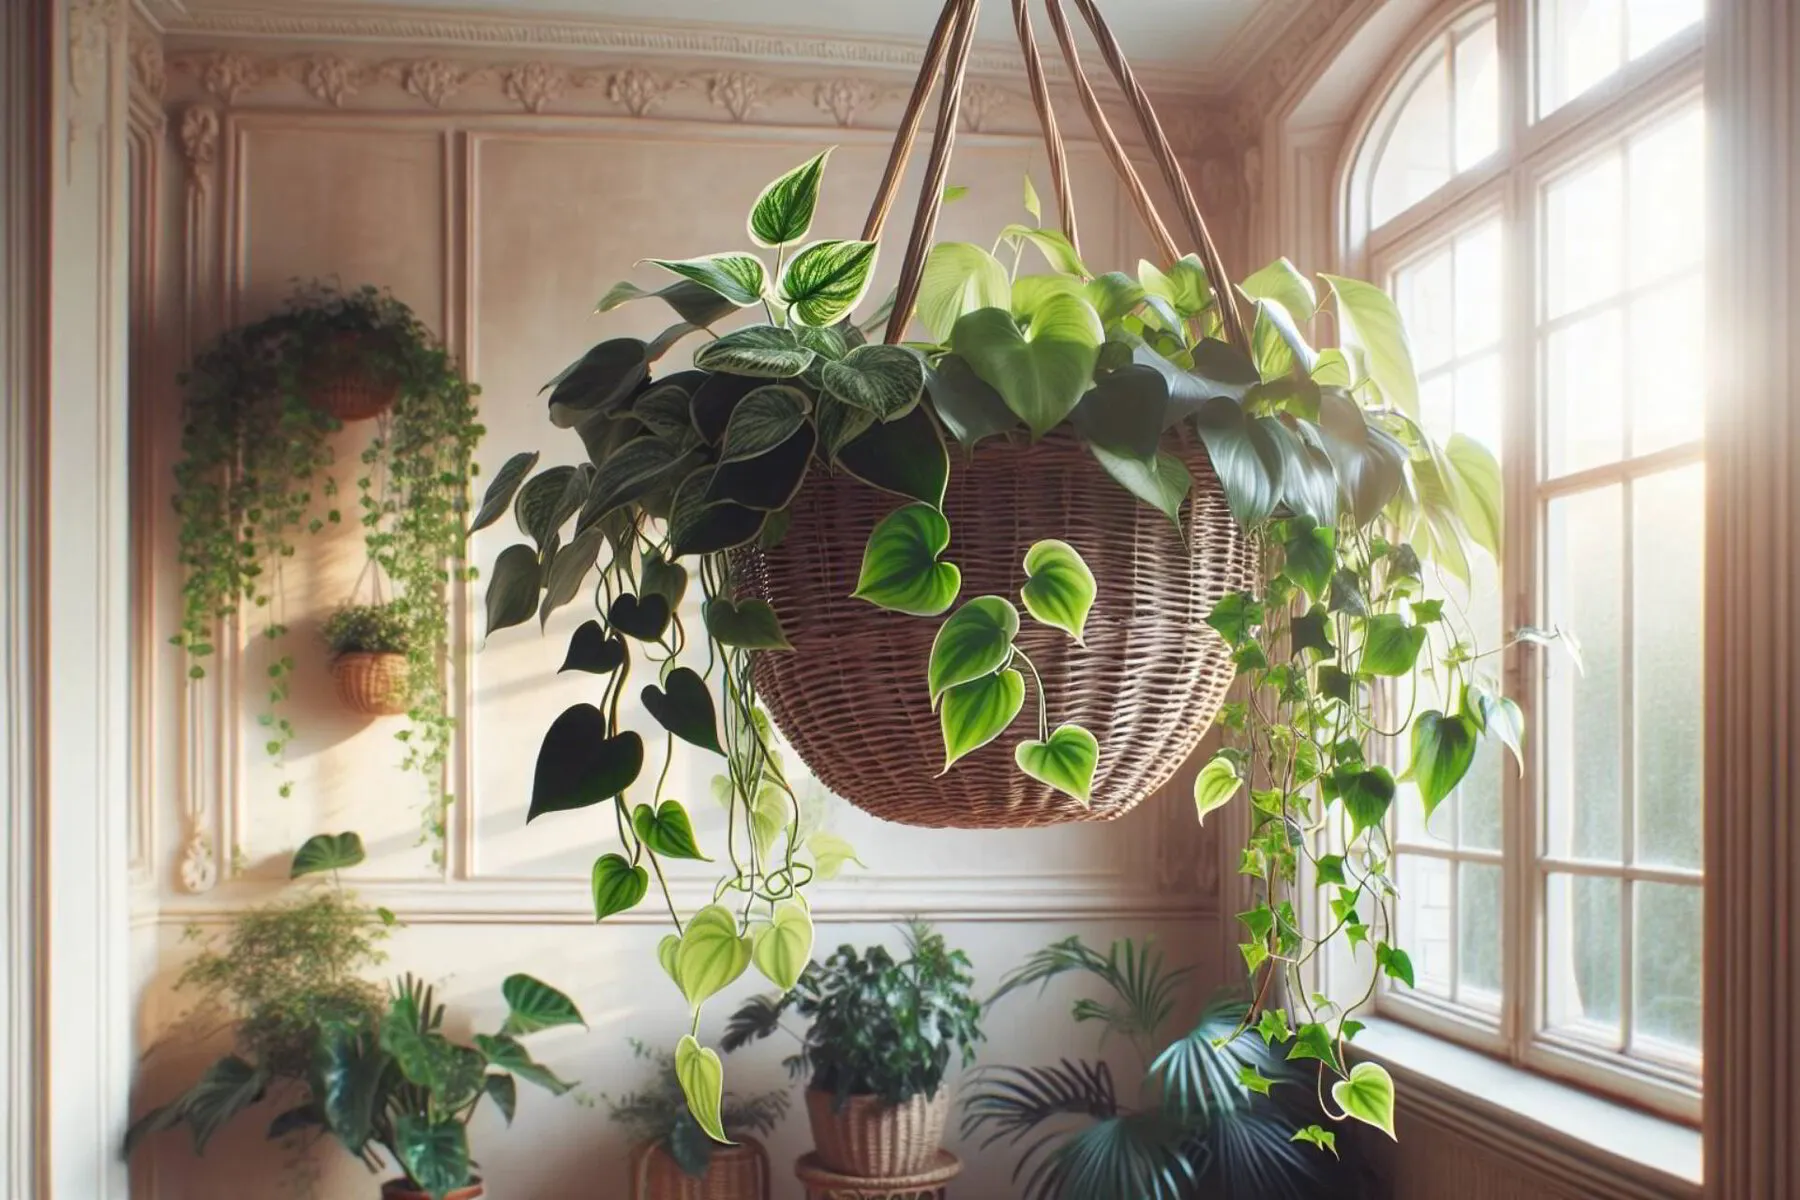 House vining plants